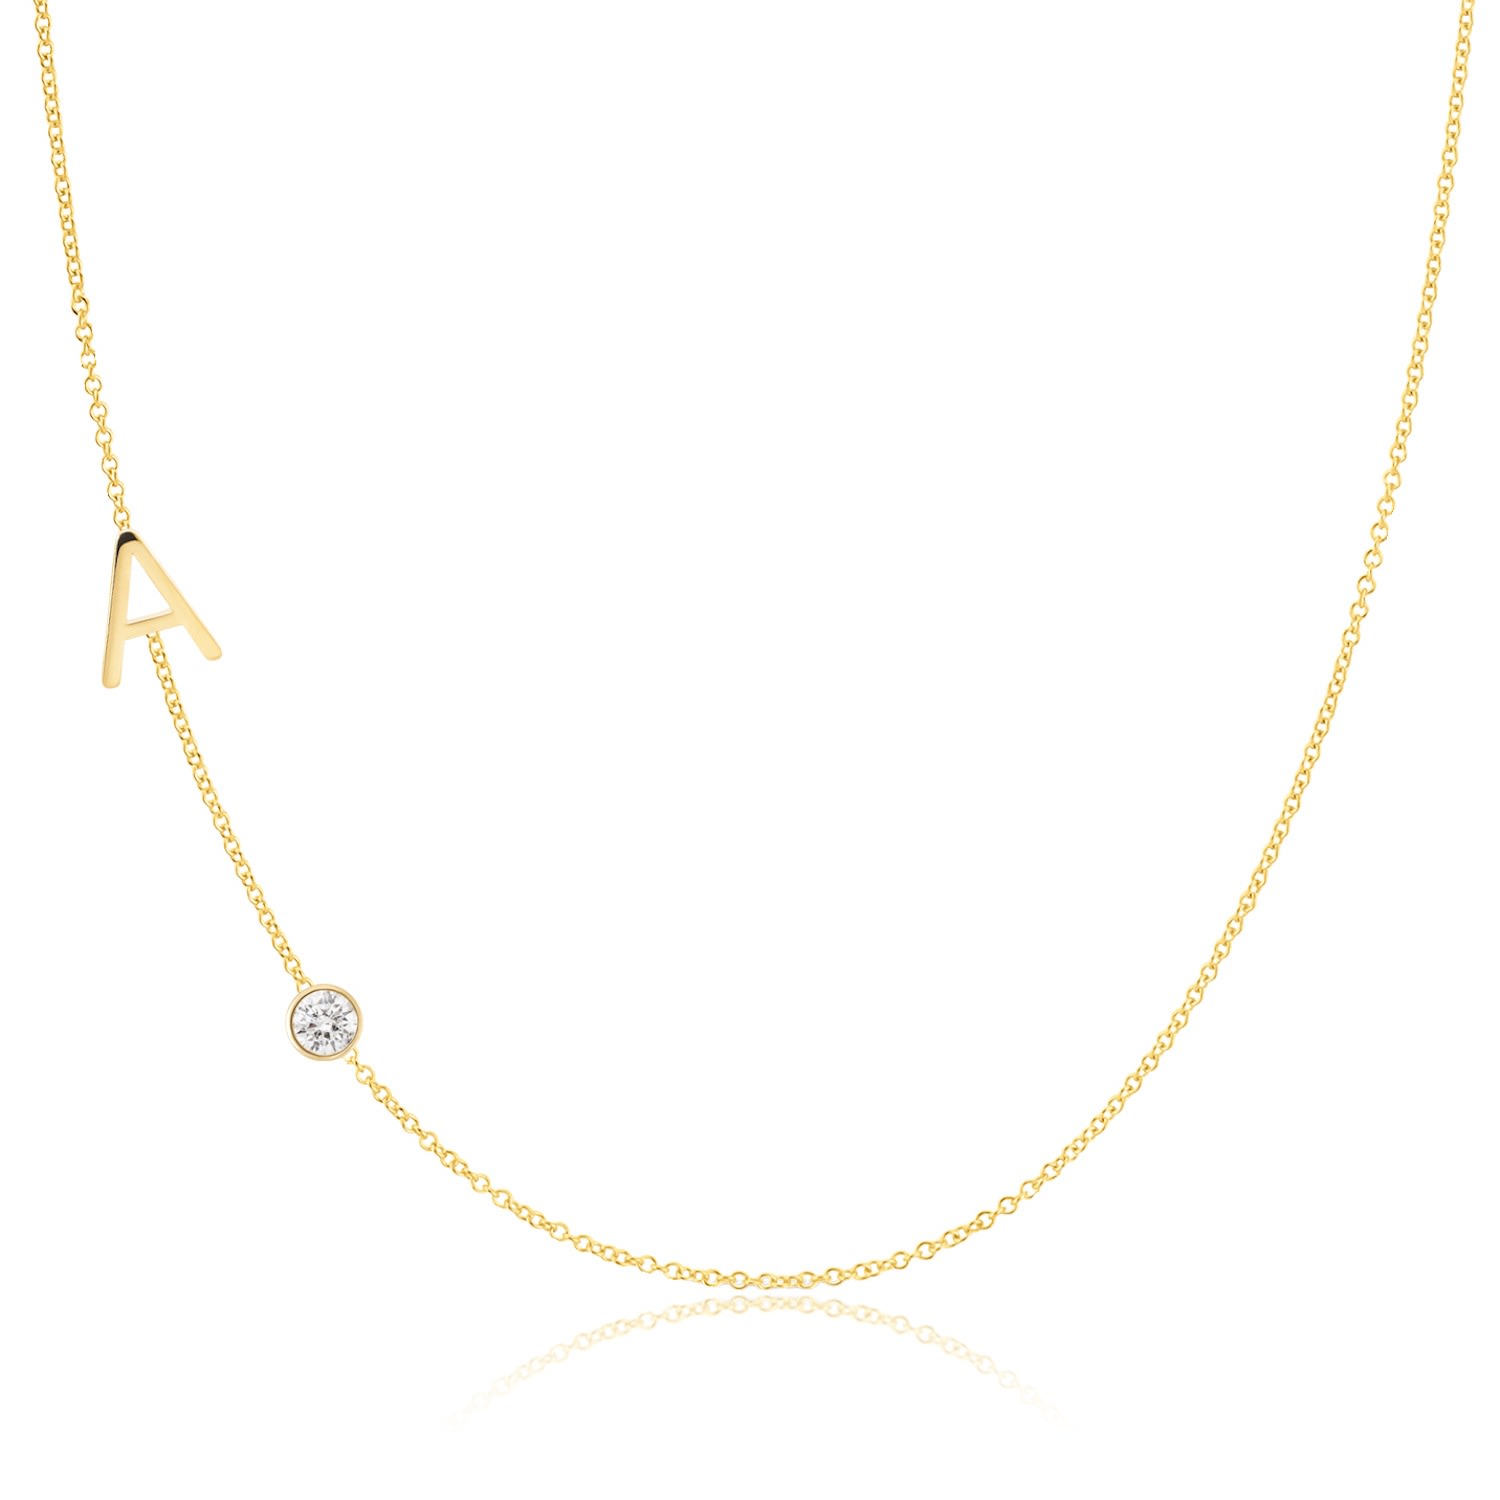 Maya Brenner Women's Monogram Necklace With Diamond - Yellow Gold - 16"